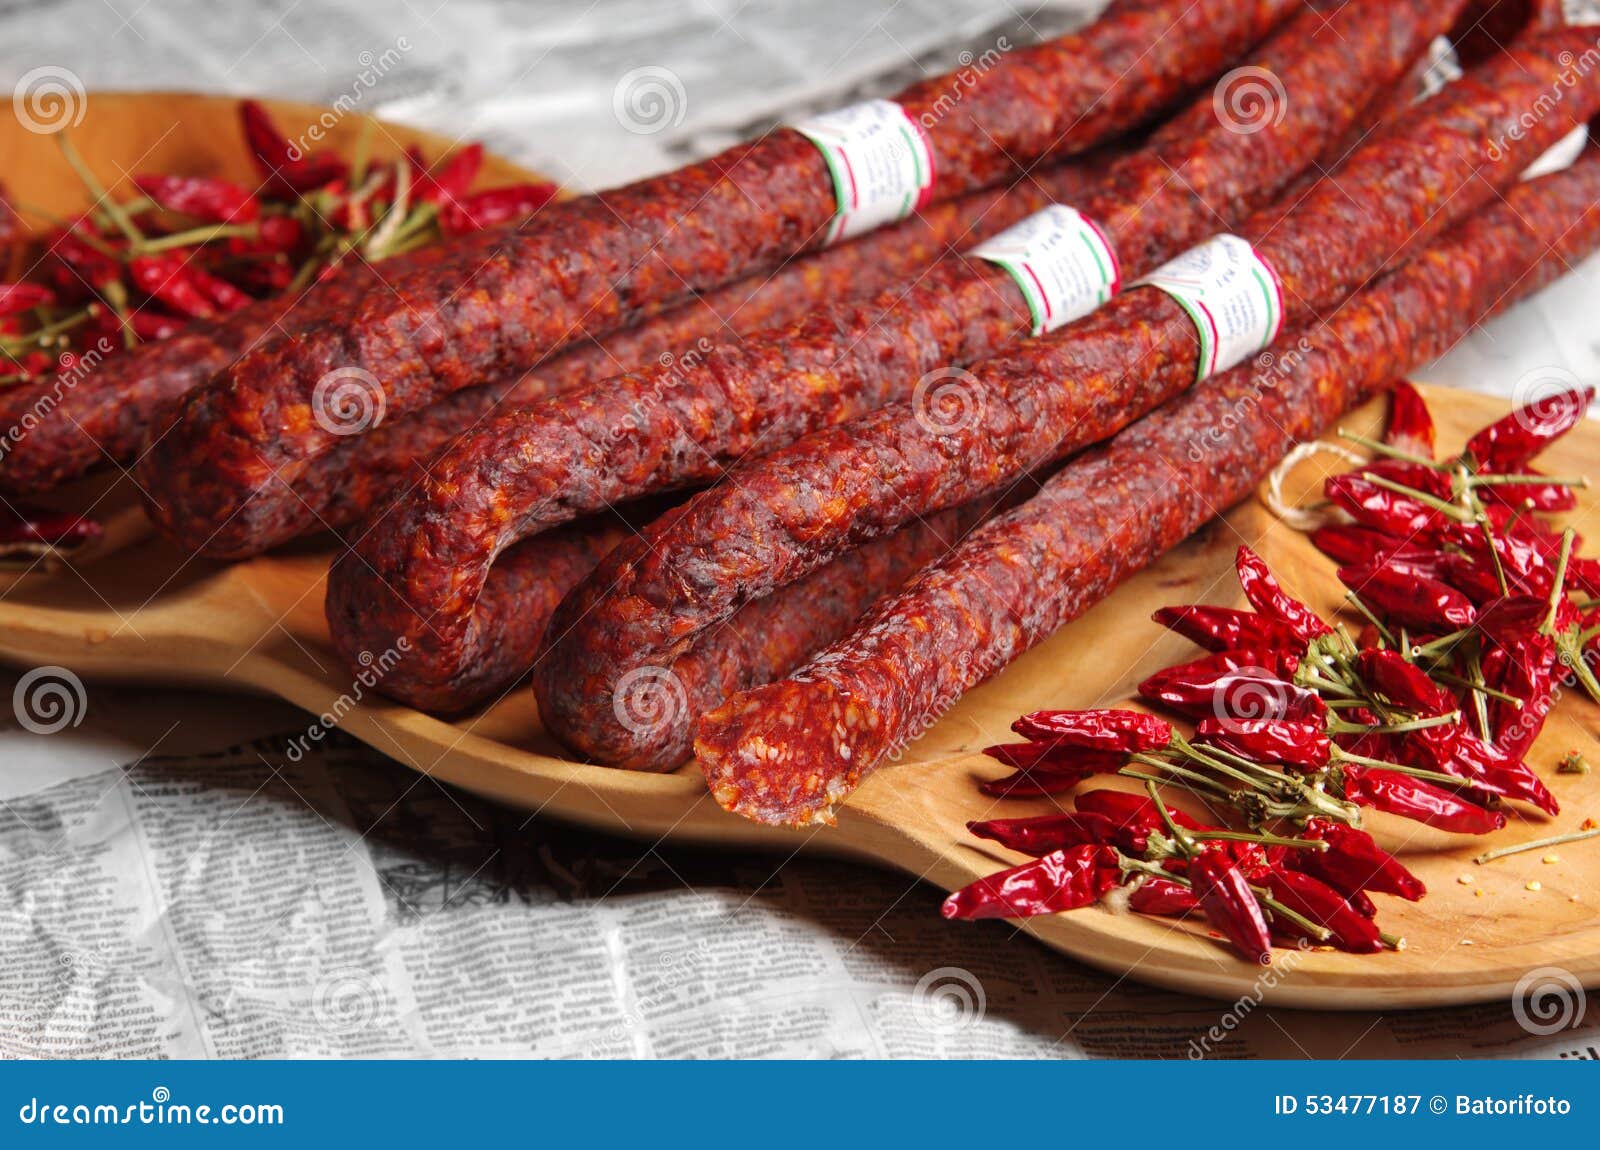 Sausage and Hungarian Red Paprika Stock Image Image of paprika, 53477187